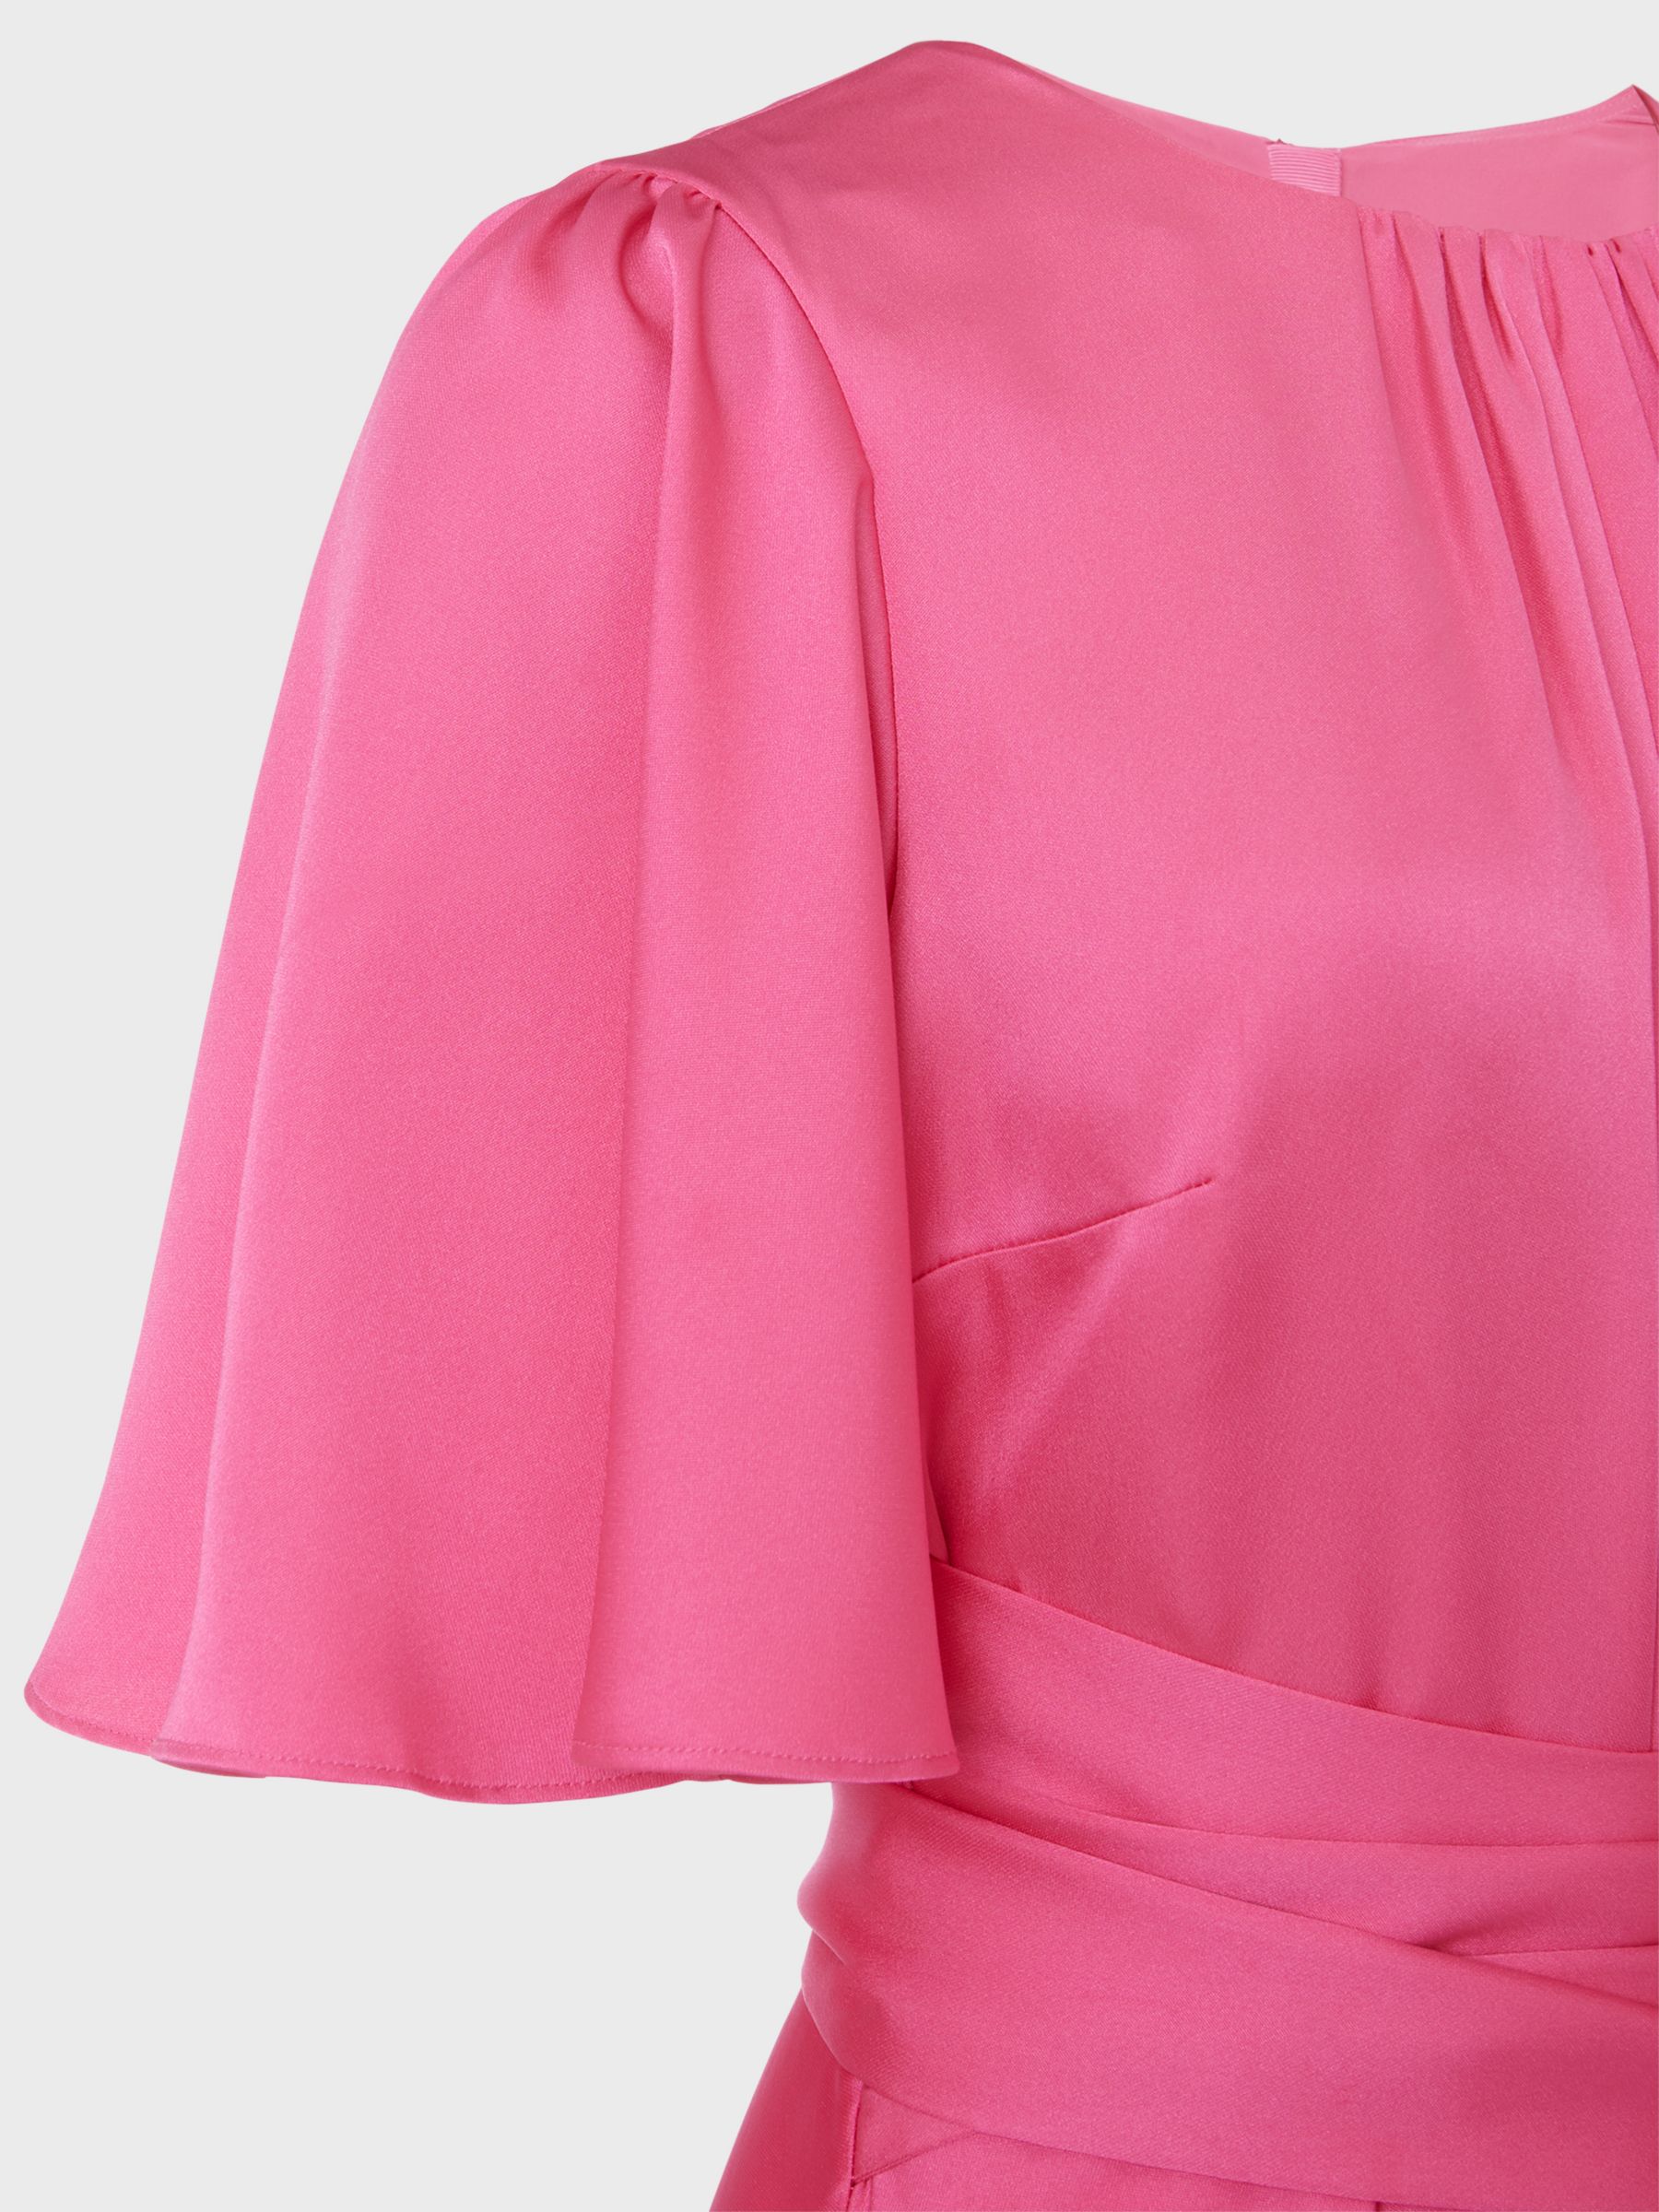 Hobbs Orelia Plain Dress, Party Pink, 10